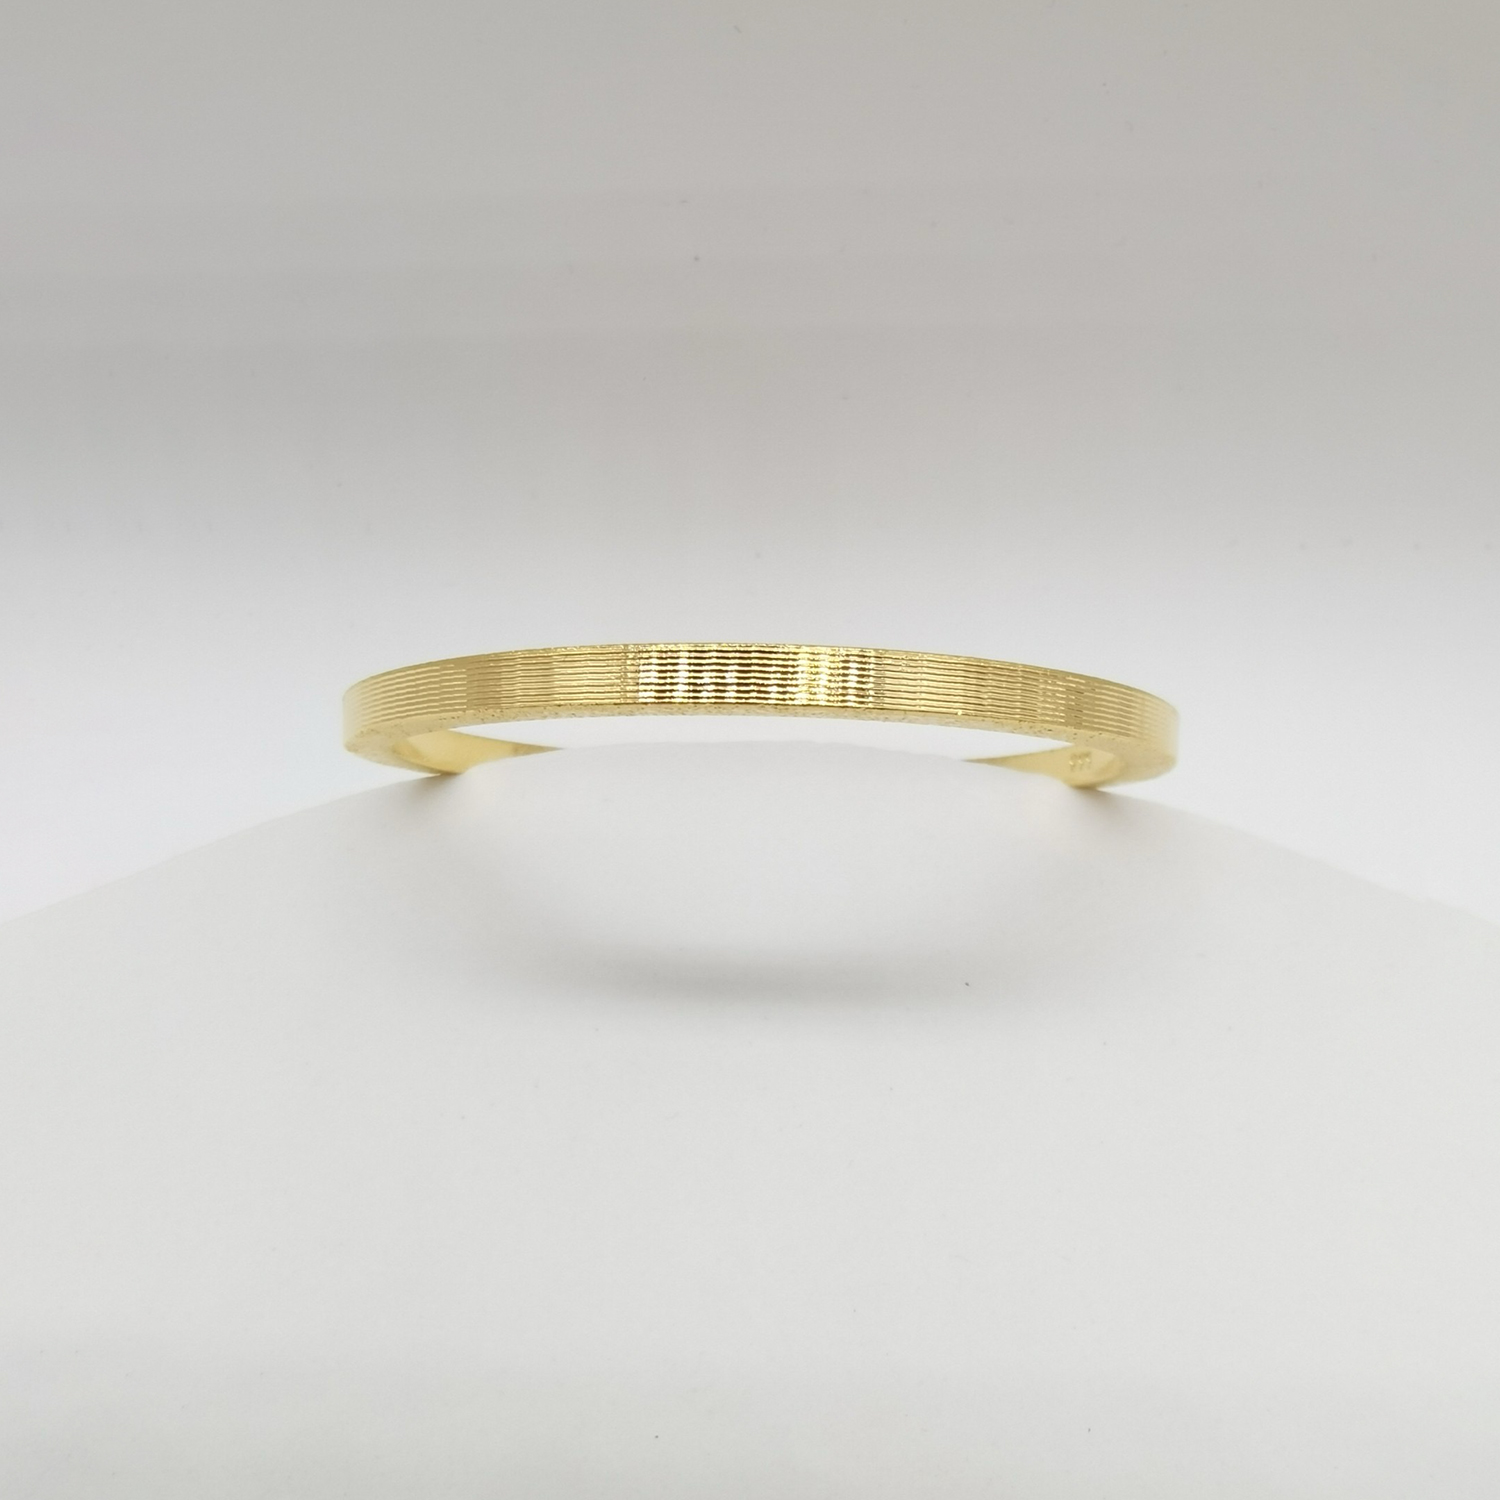 Alluvial brushed sandblasted vacuum electroplated 24K gold geometric chopsticks bracelet